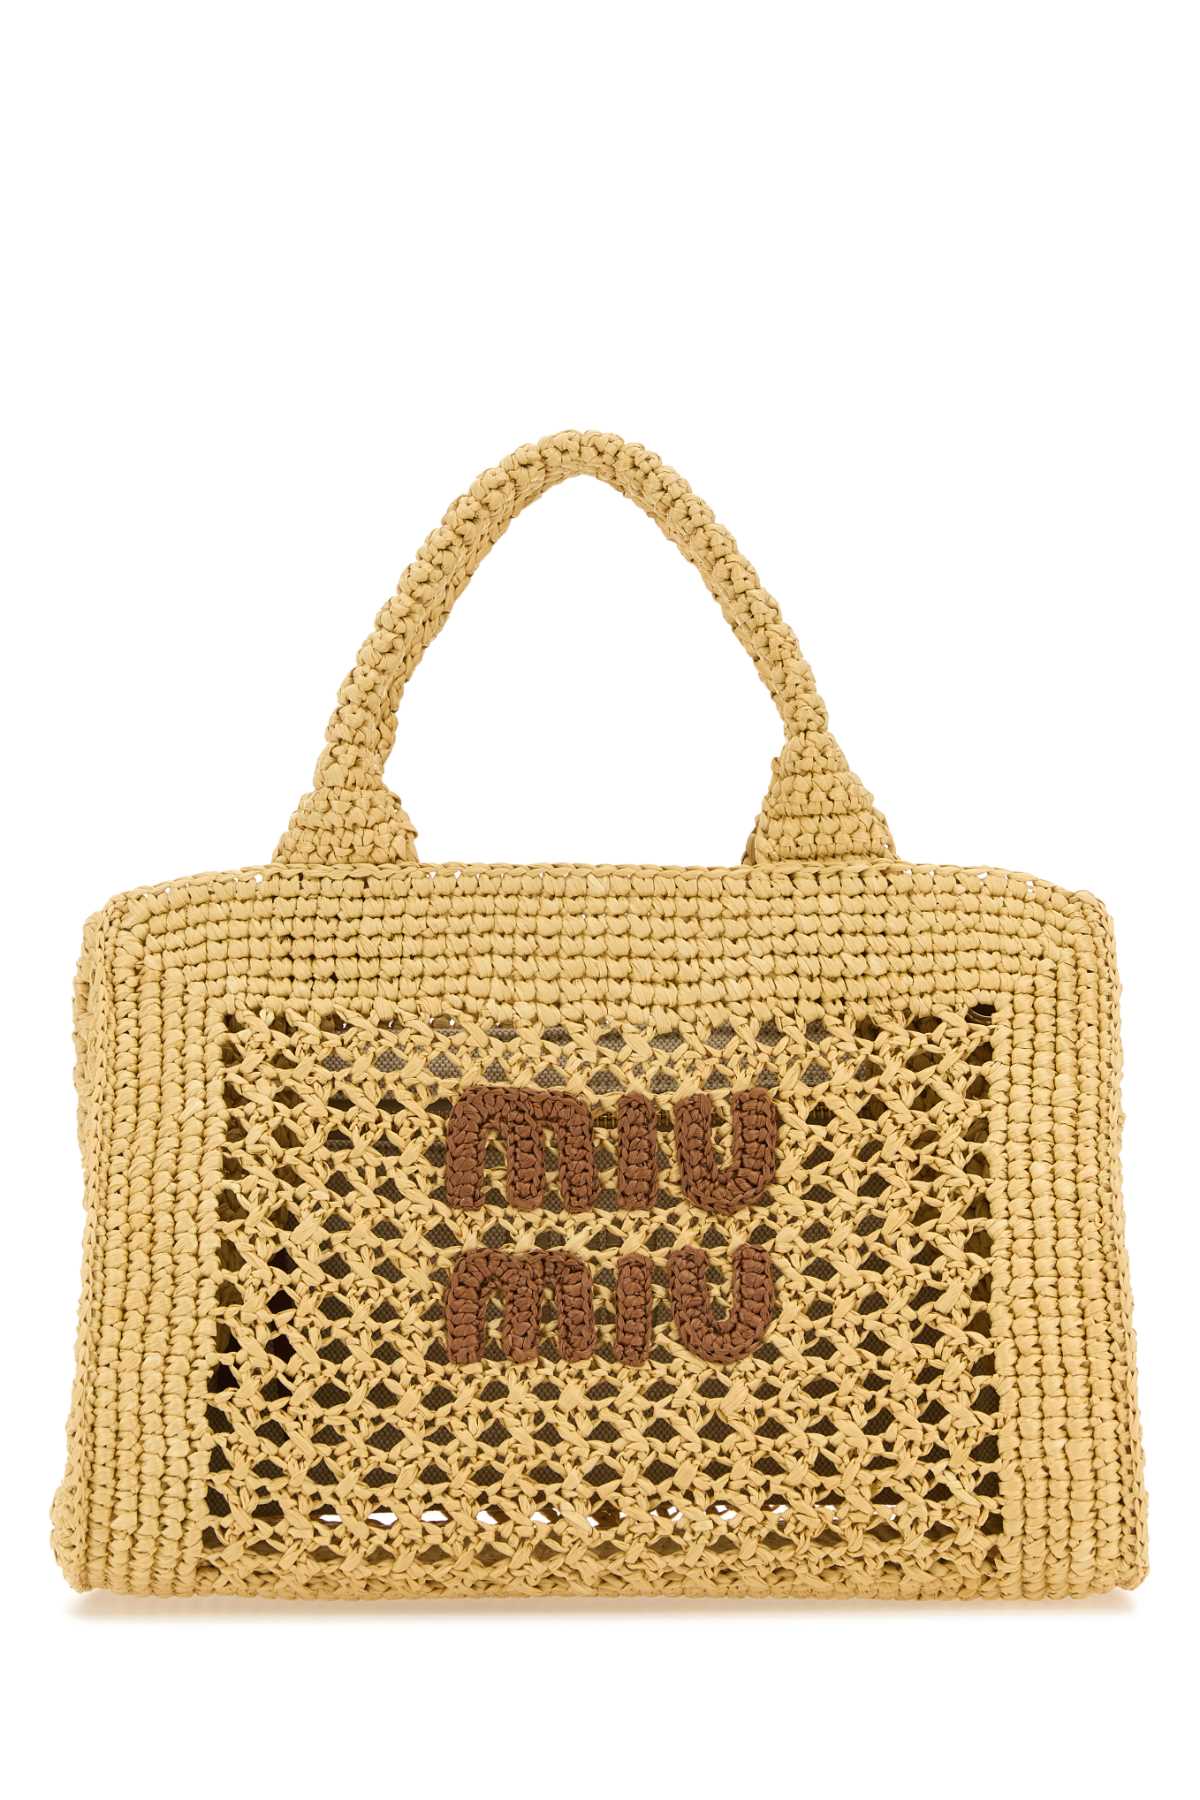 Miu Miu Beige Crochet Handbag In Brown